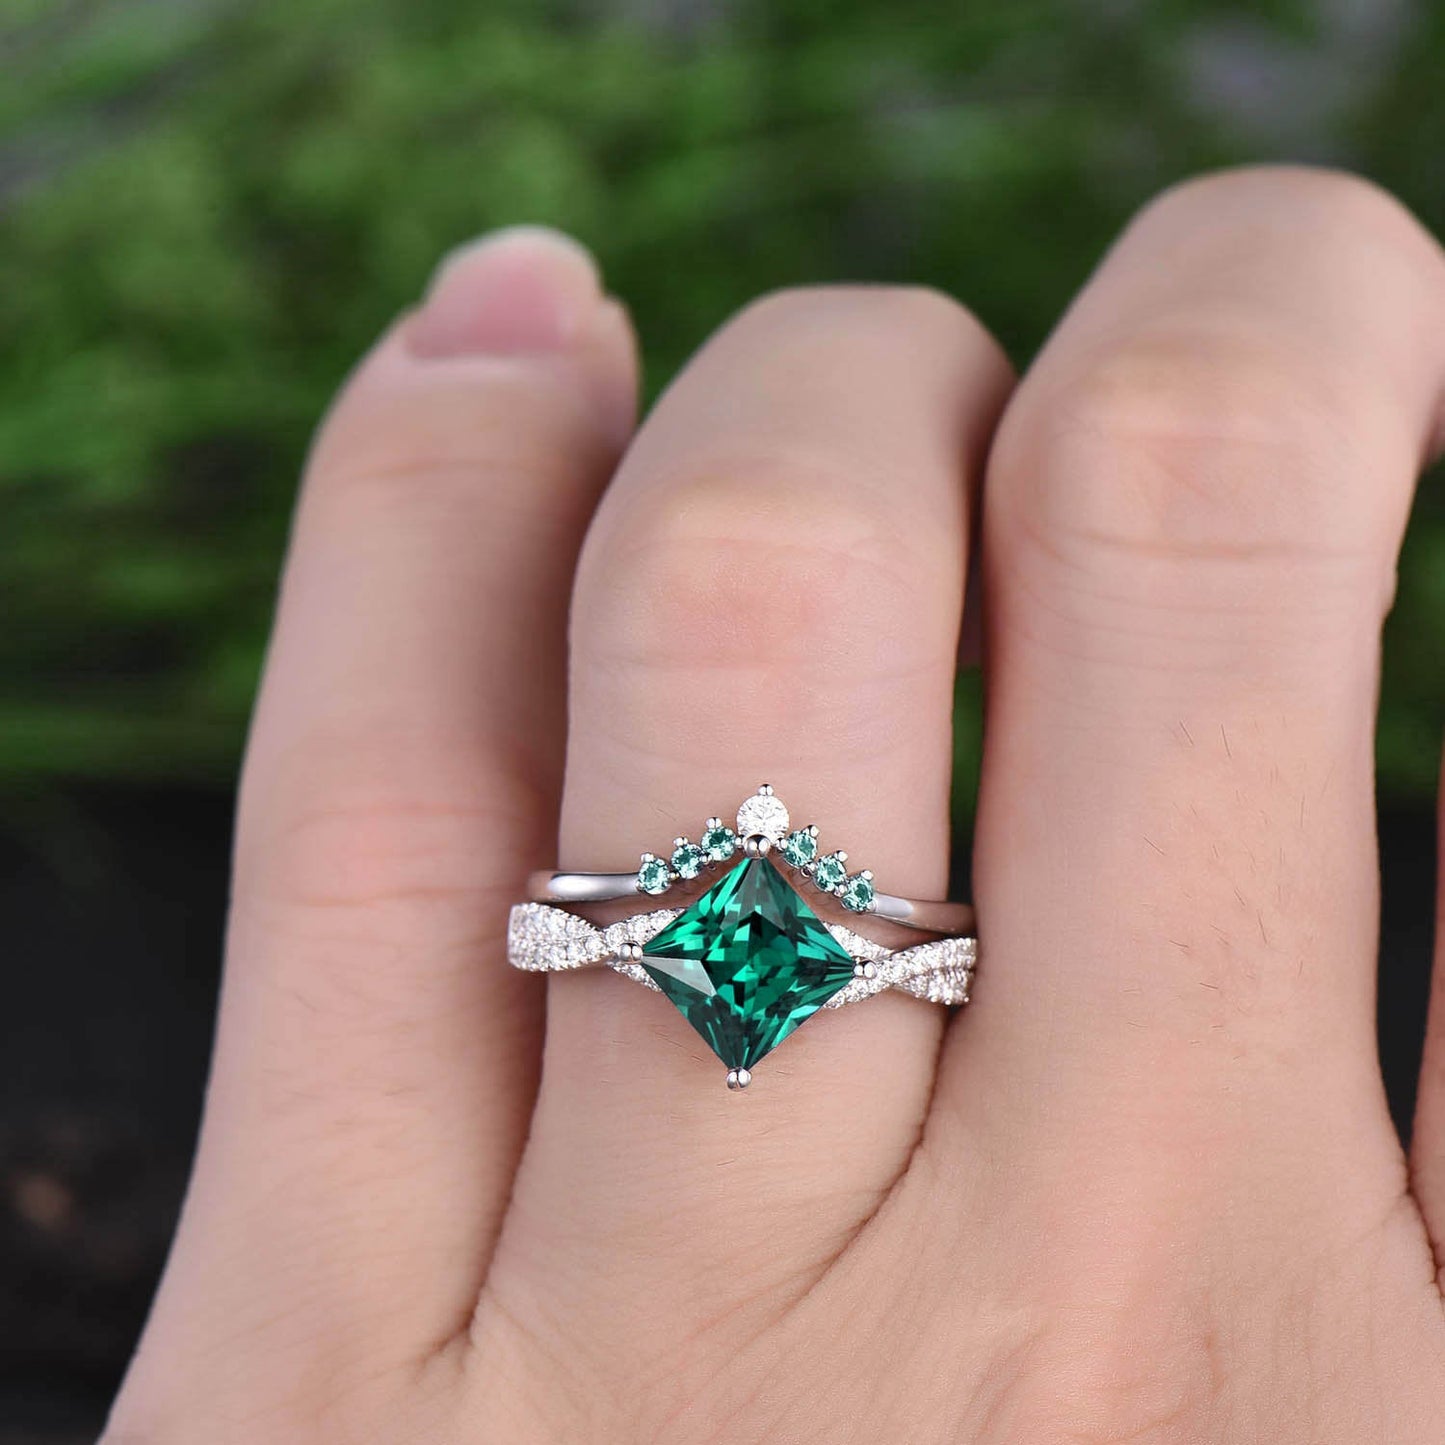 2pcs princess cut emerald engagement ring set rose gold ring set natural emerald wedding band moissanite ring May birthstone ring jewelry